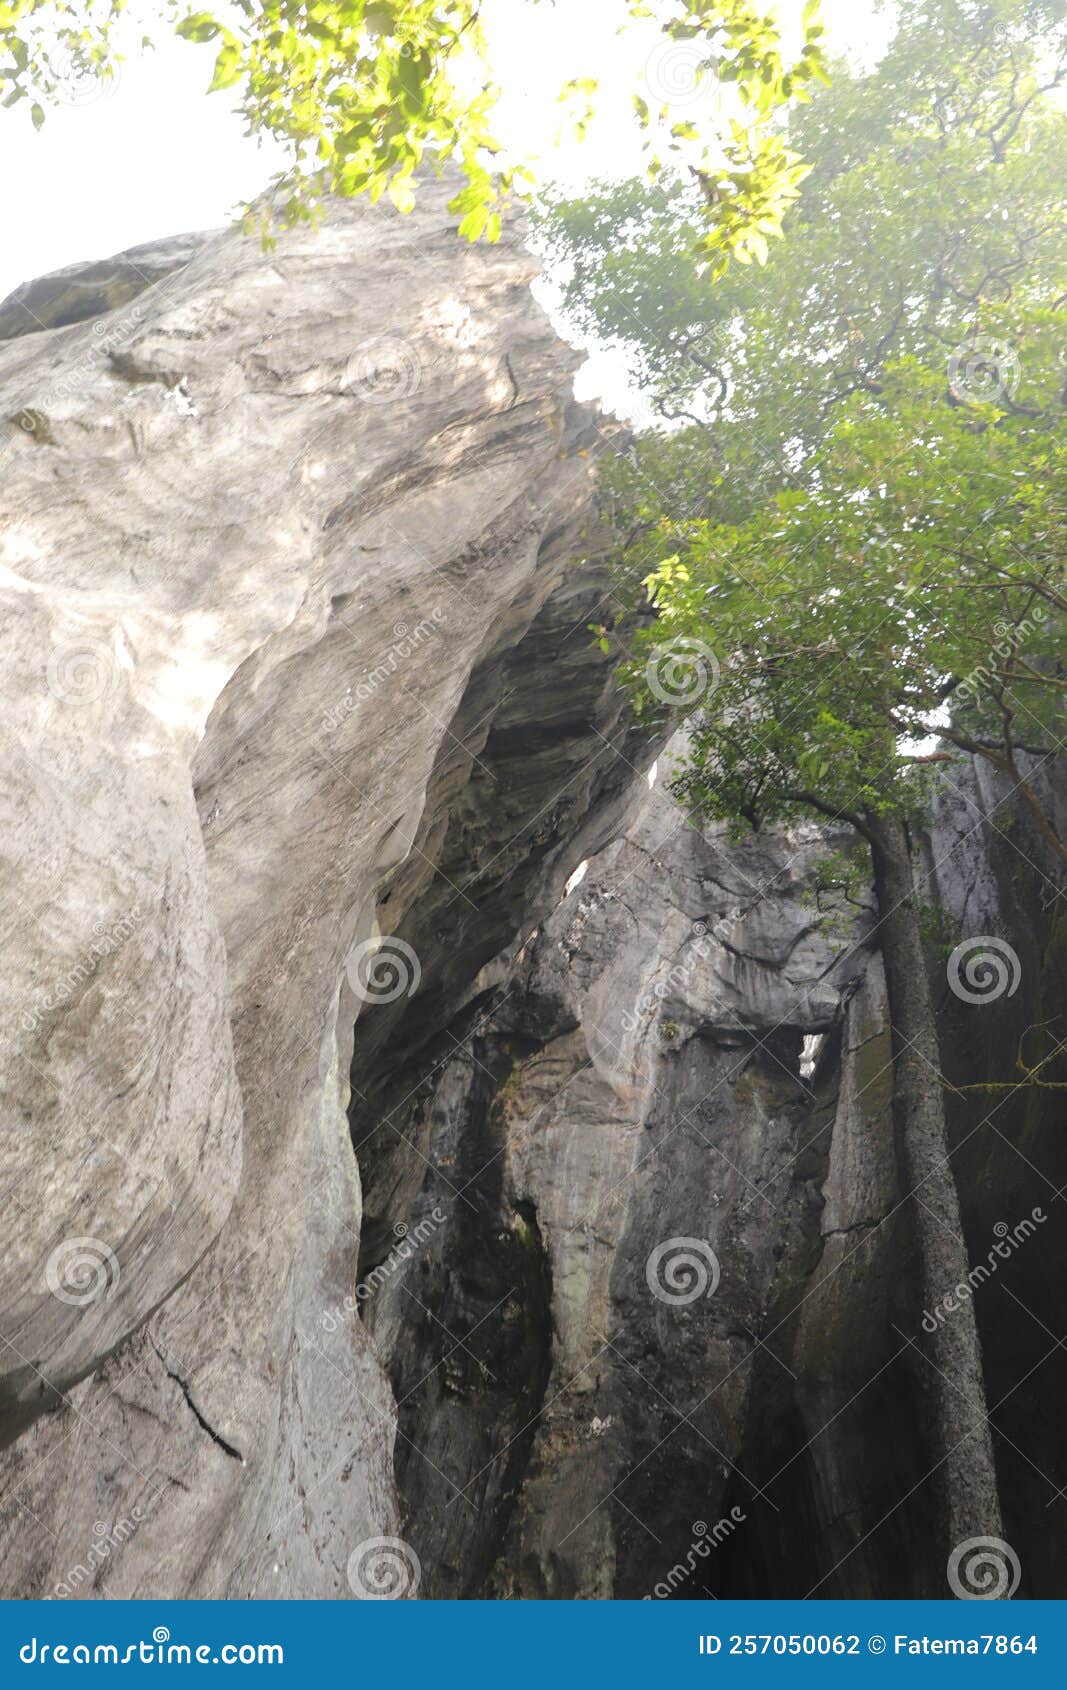 yana caves - karnataka tourism - india adventure trip - hindu mythology